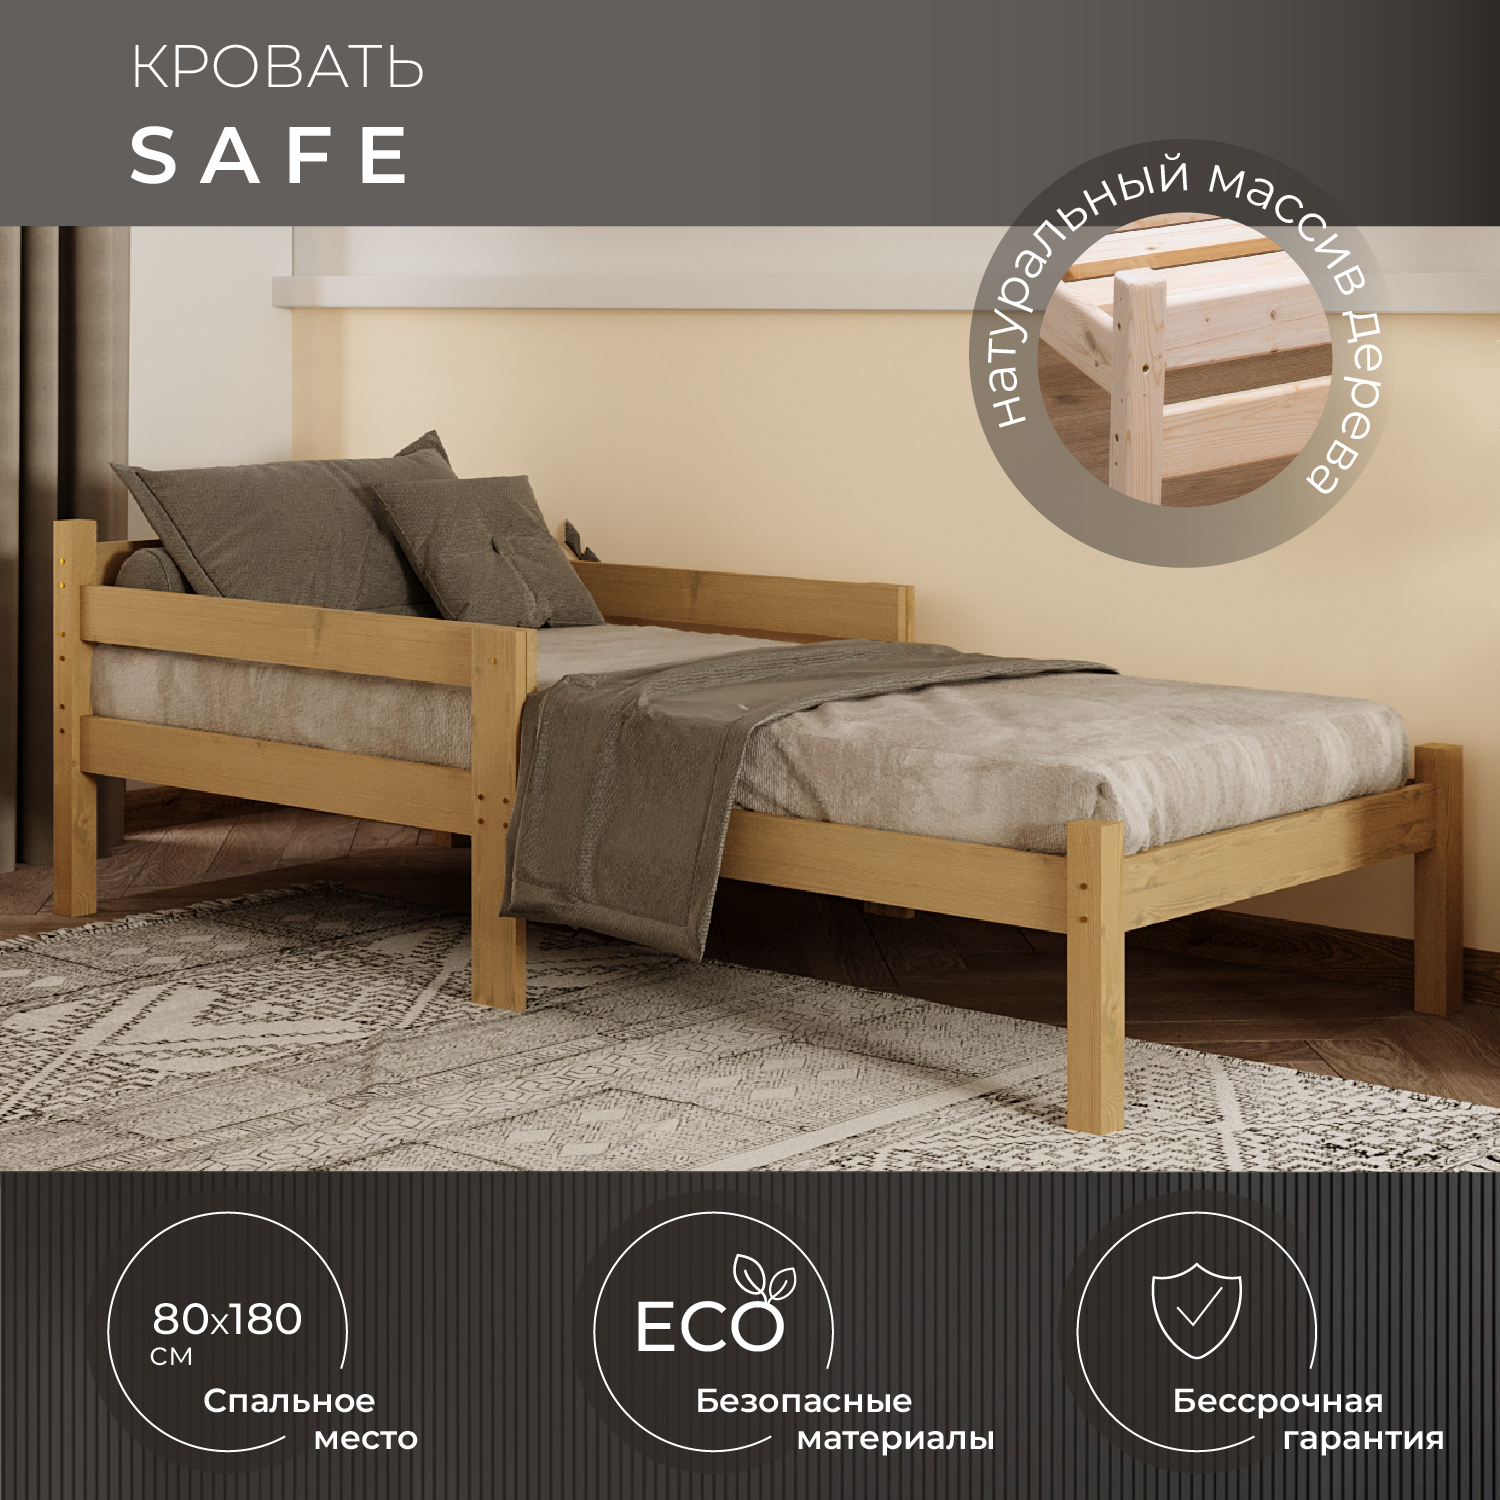 Кровать Новирон Safe 80х180 см